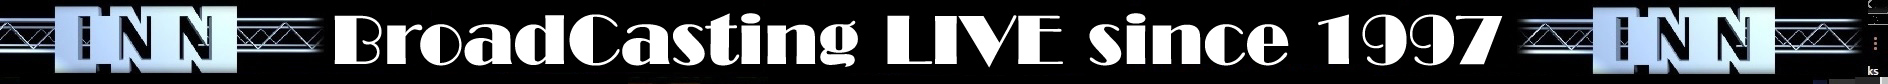 INN Broadcasting live since 1997